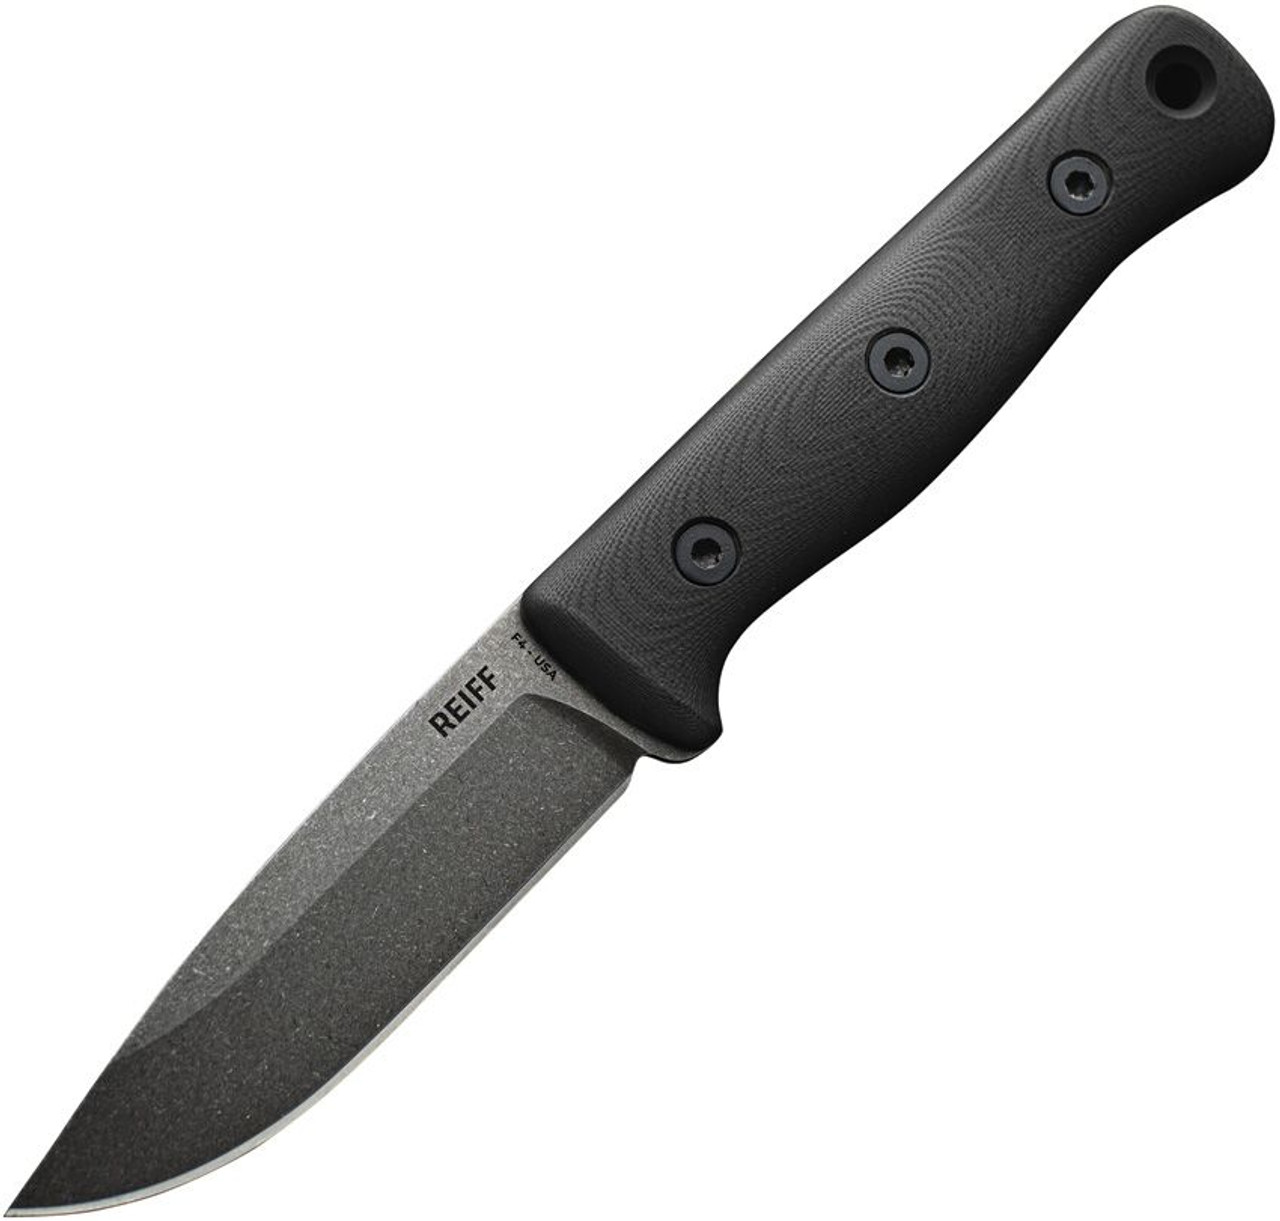 Reiff Knives F4 Bushcraft Survival Knife (REKF411BLGL) 4" CPM-3V Carbon Steel Drop Point Plain Blade, Black G-10 Handle, Brown Leather Sheath